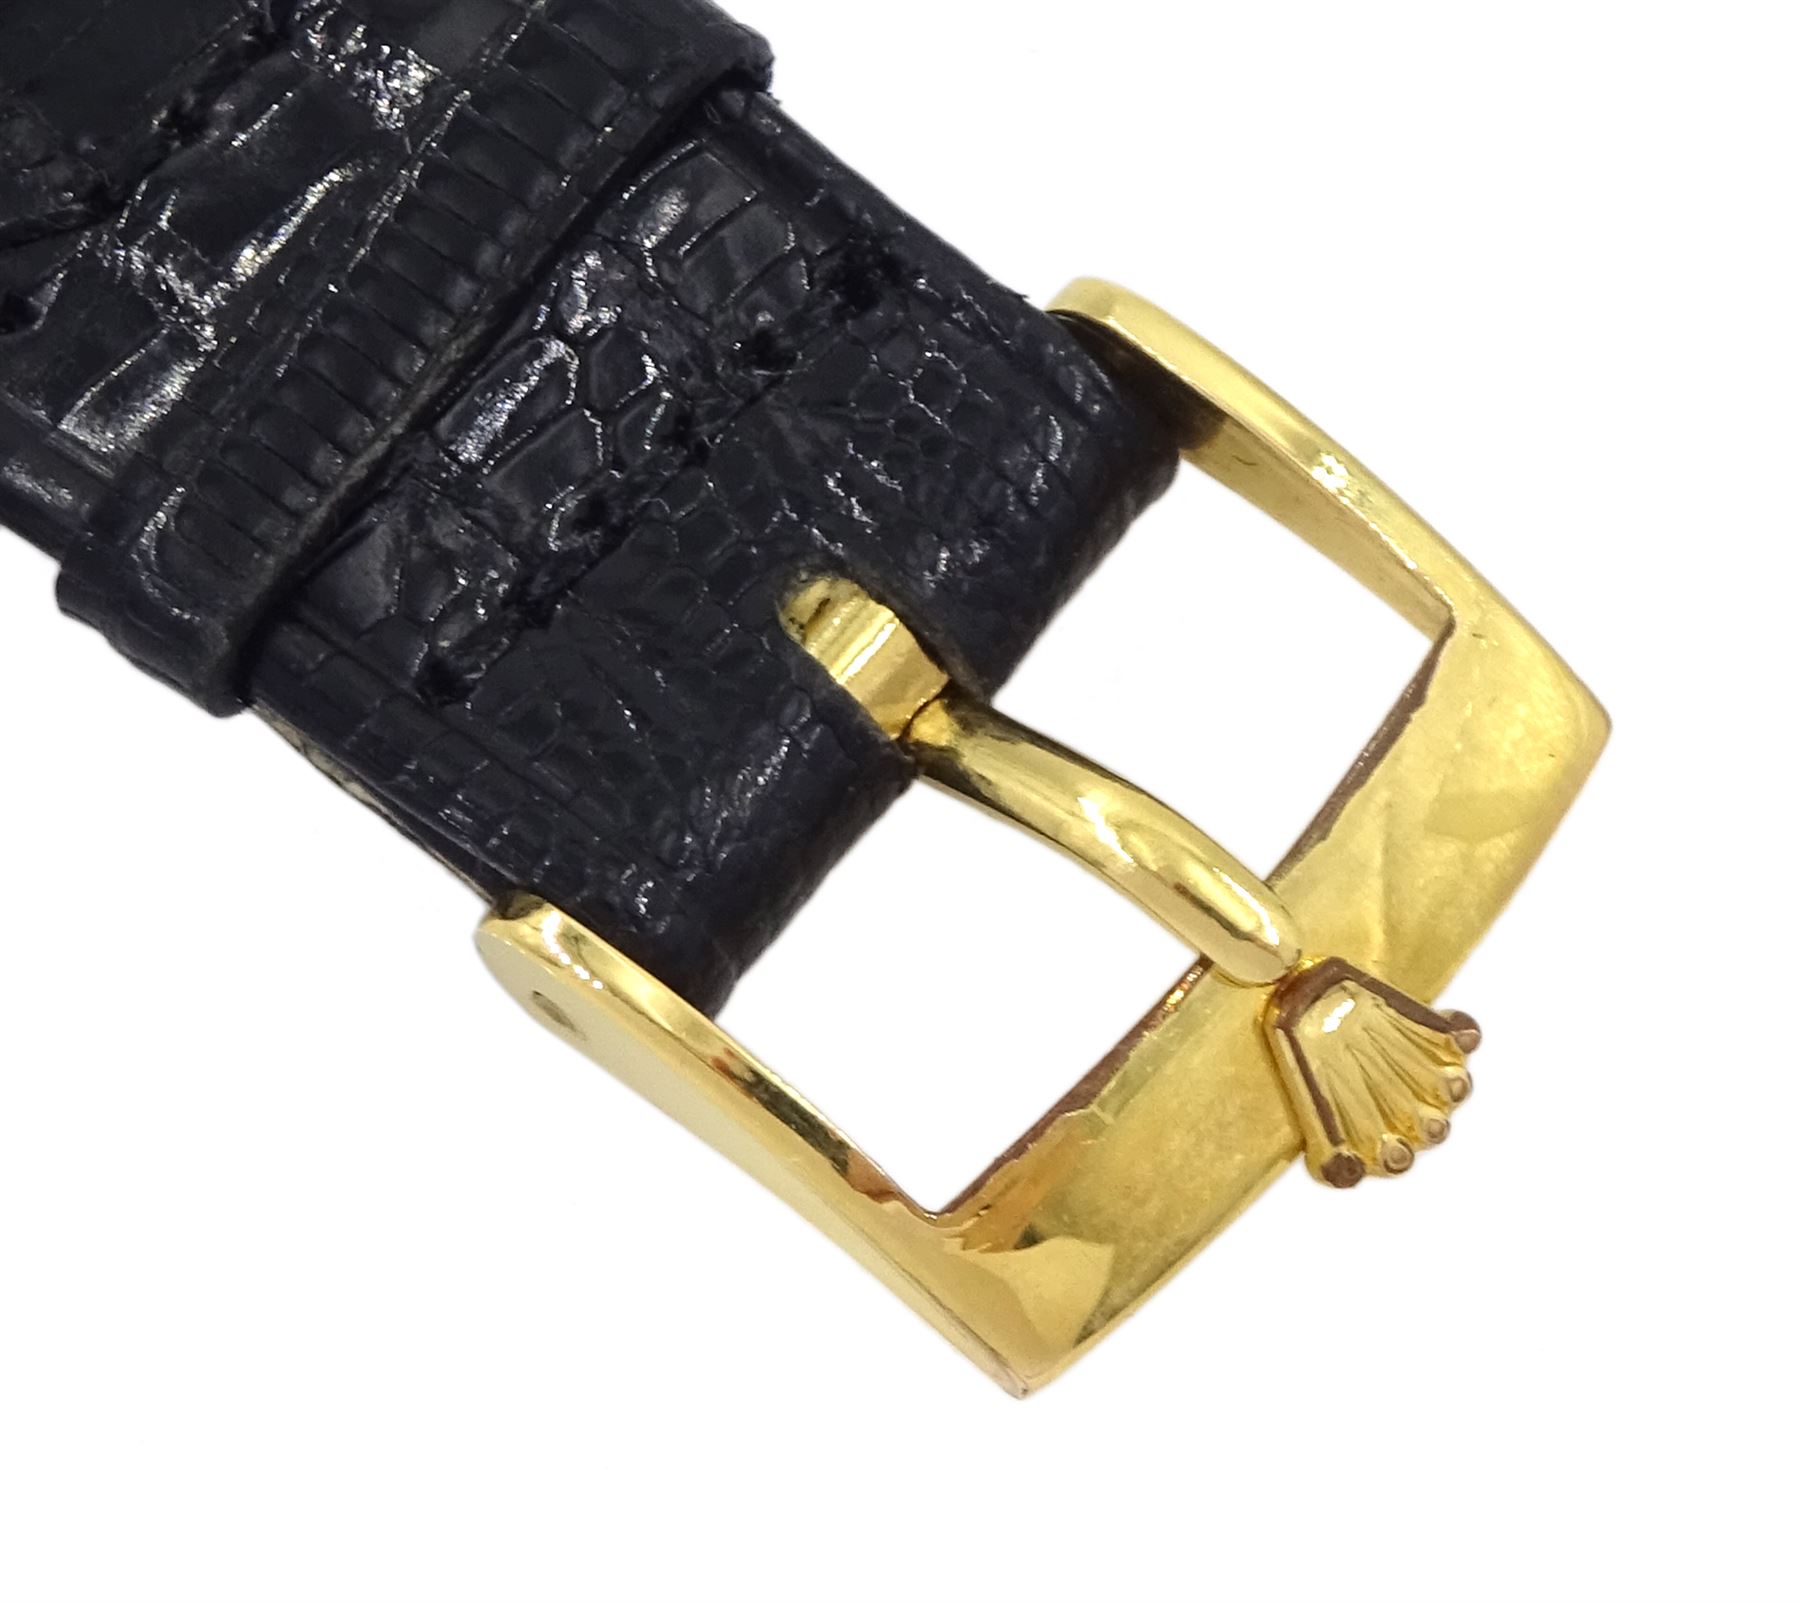 Rolex Precision gentleman's 9ct gold manual wind presentation wristwatch - Image 2 of 8